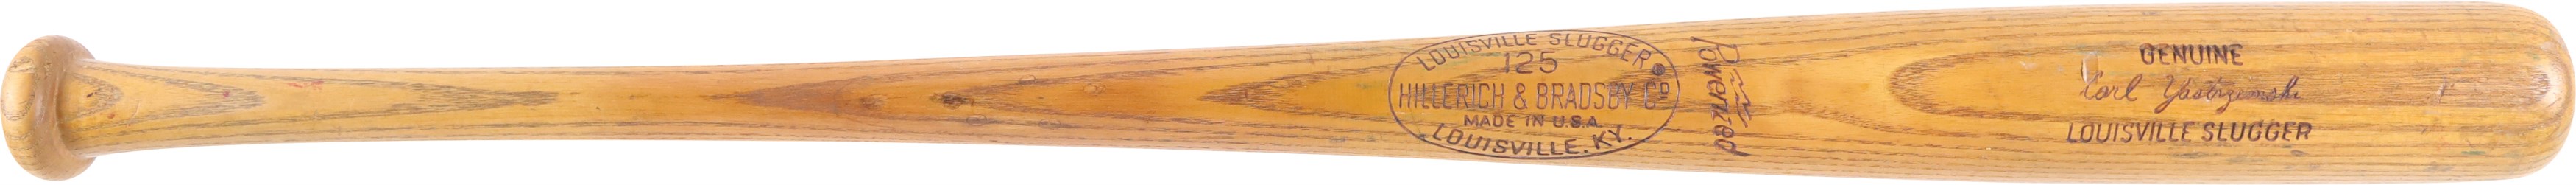 1967-68 Carl Yastrzemski Boston Red Sox Game Used Bat